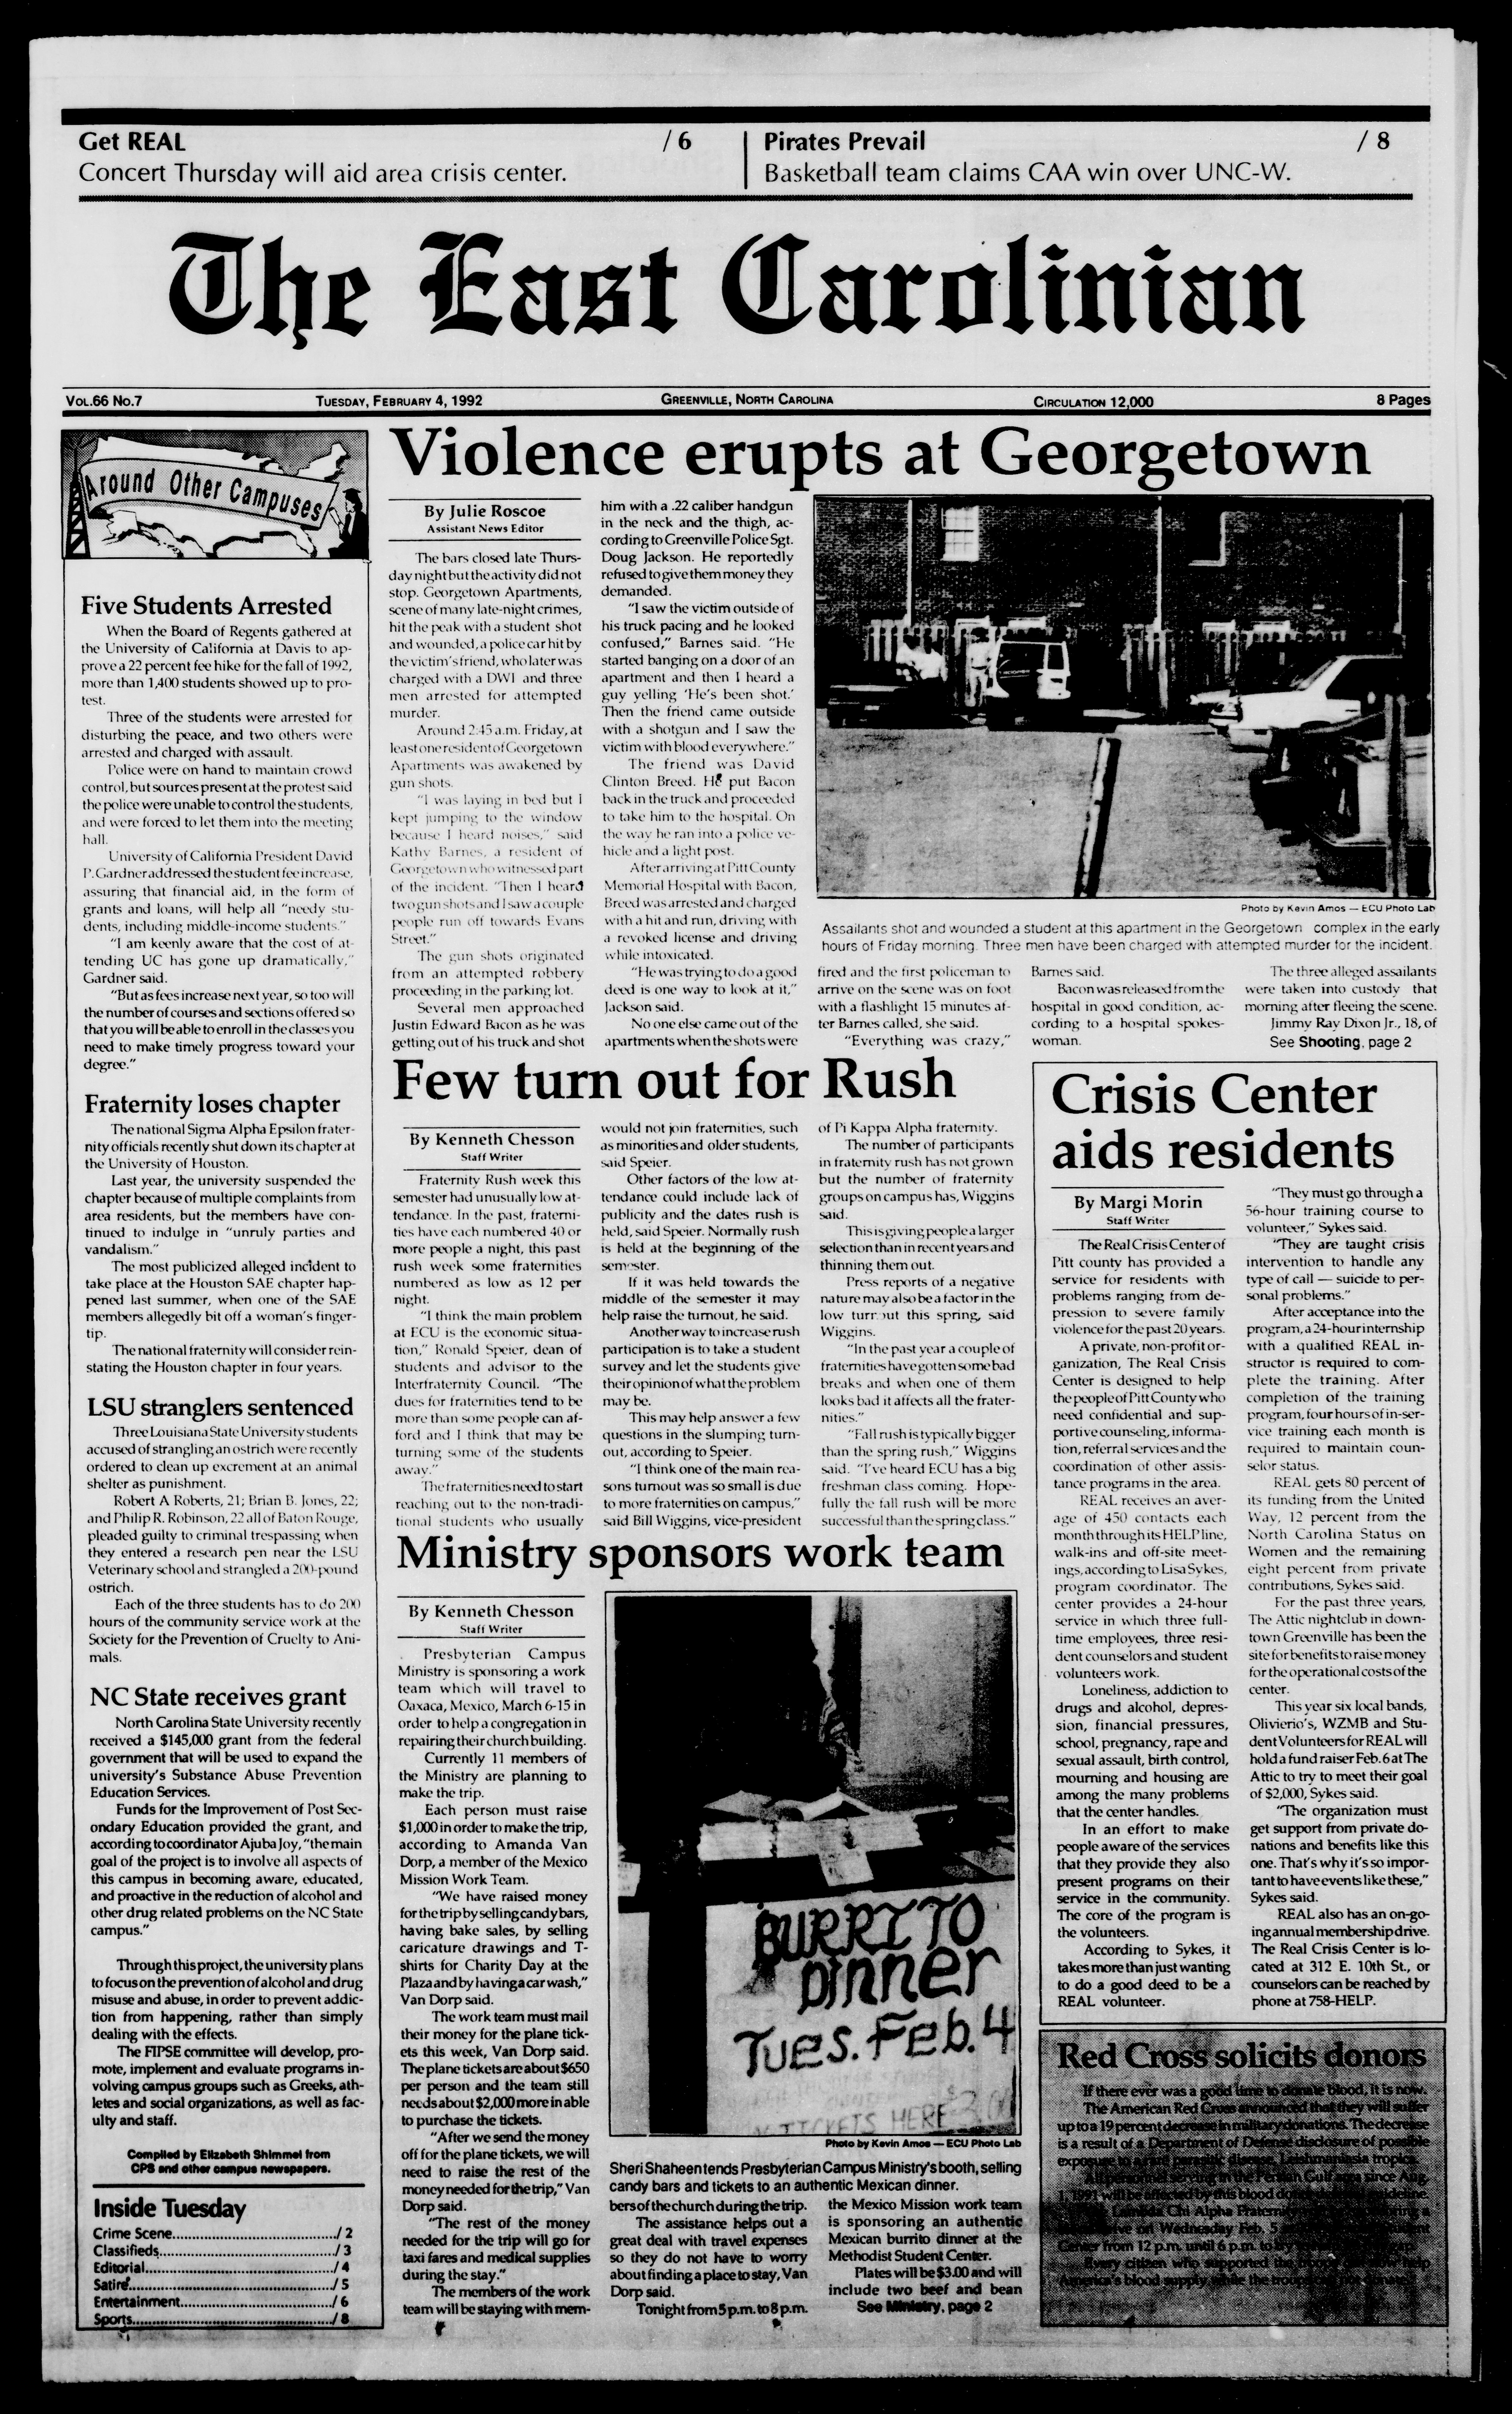 The East Carolinian, February 4, 1992